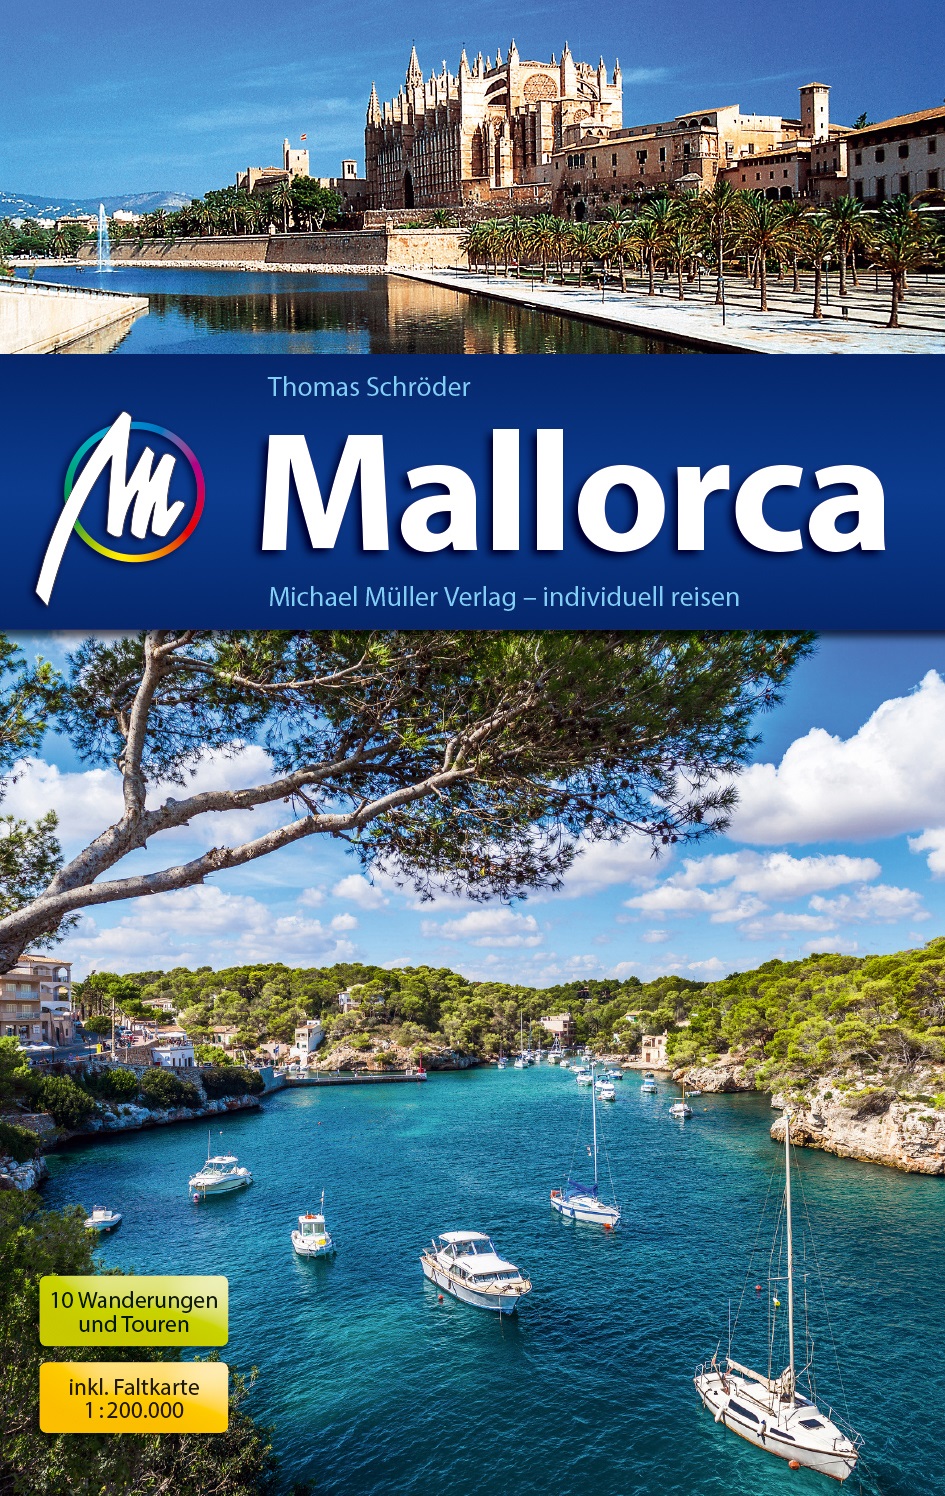 #Reiseführer #Mallorca #MichaelMüller #Reiseblog